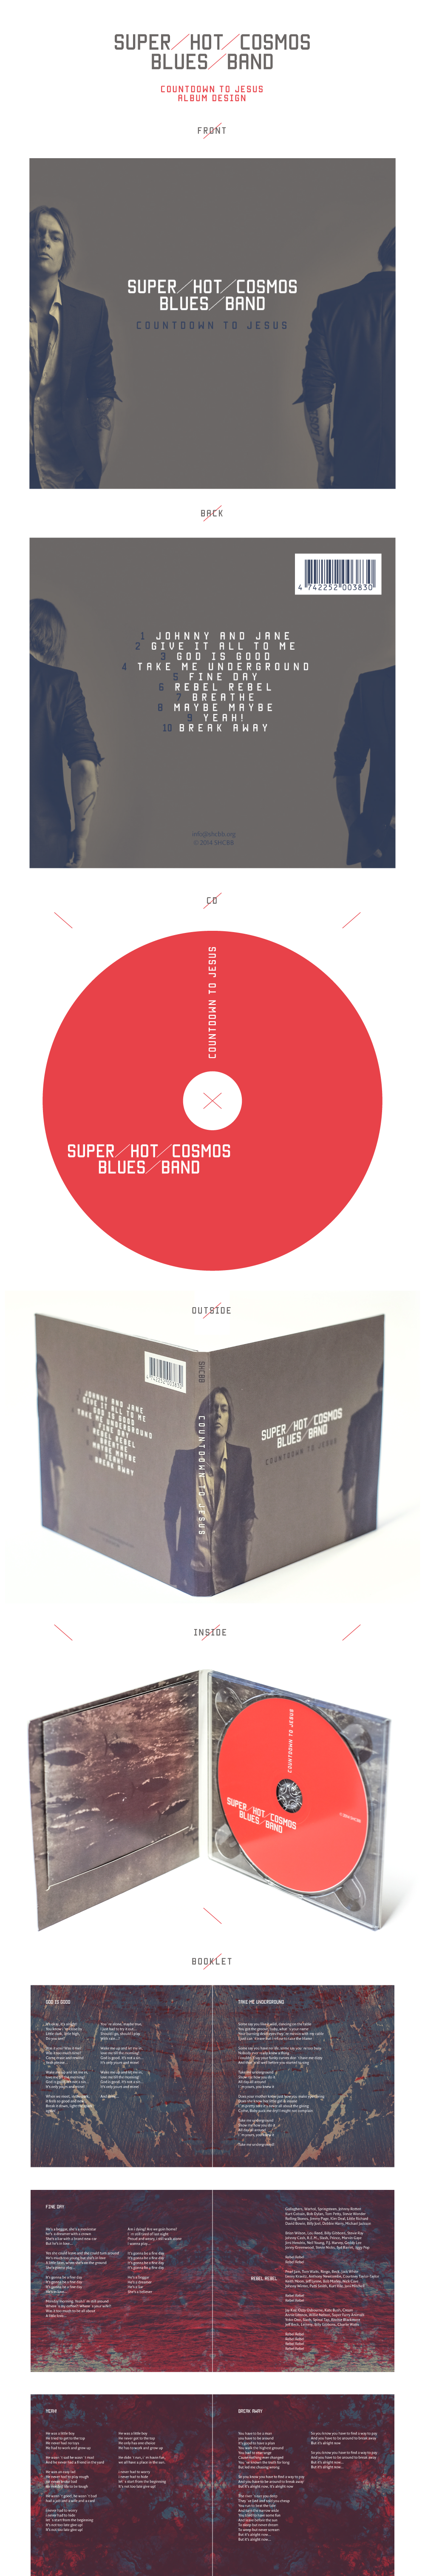 cover design SHCBB Album design packaging design